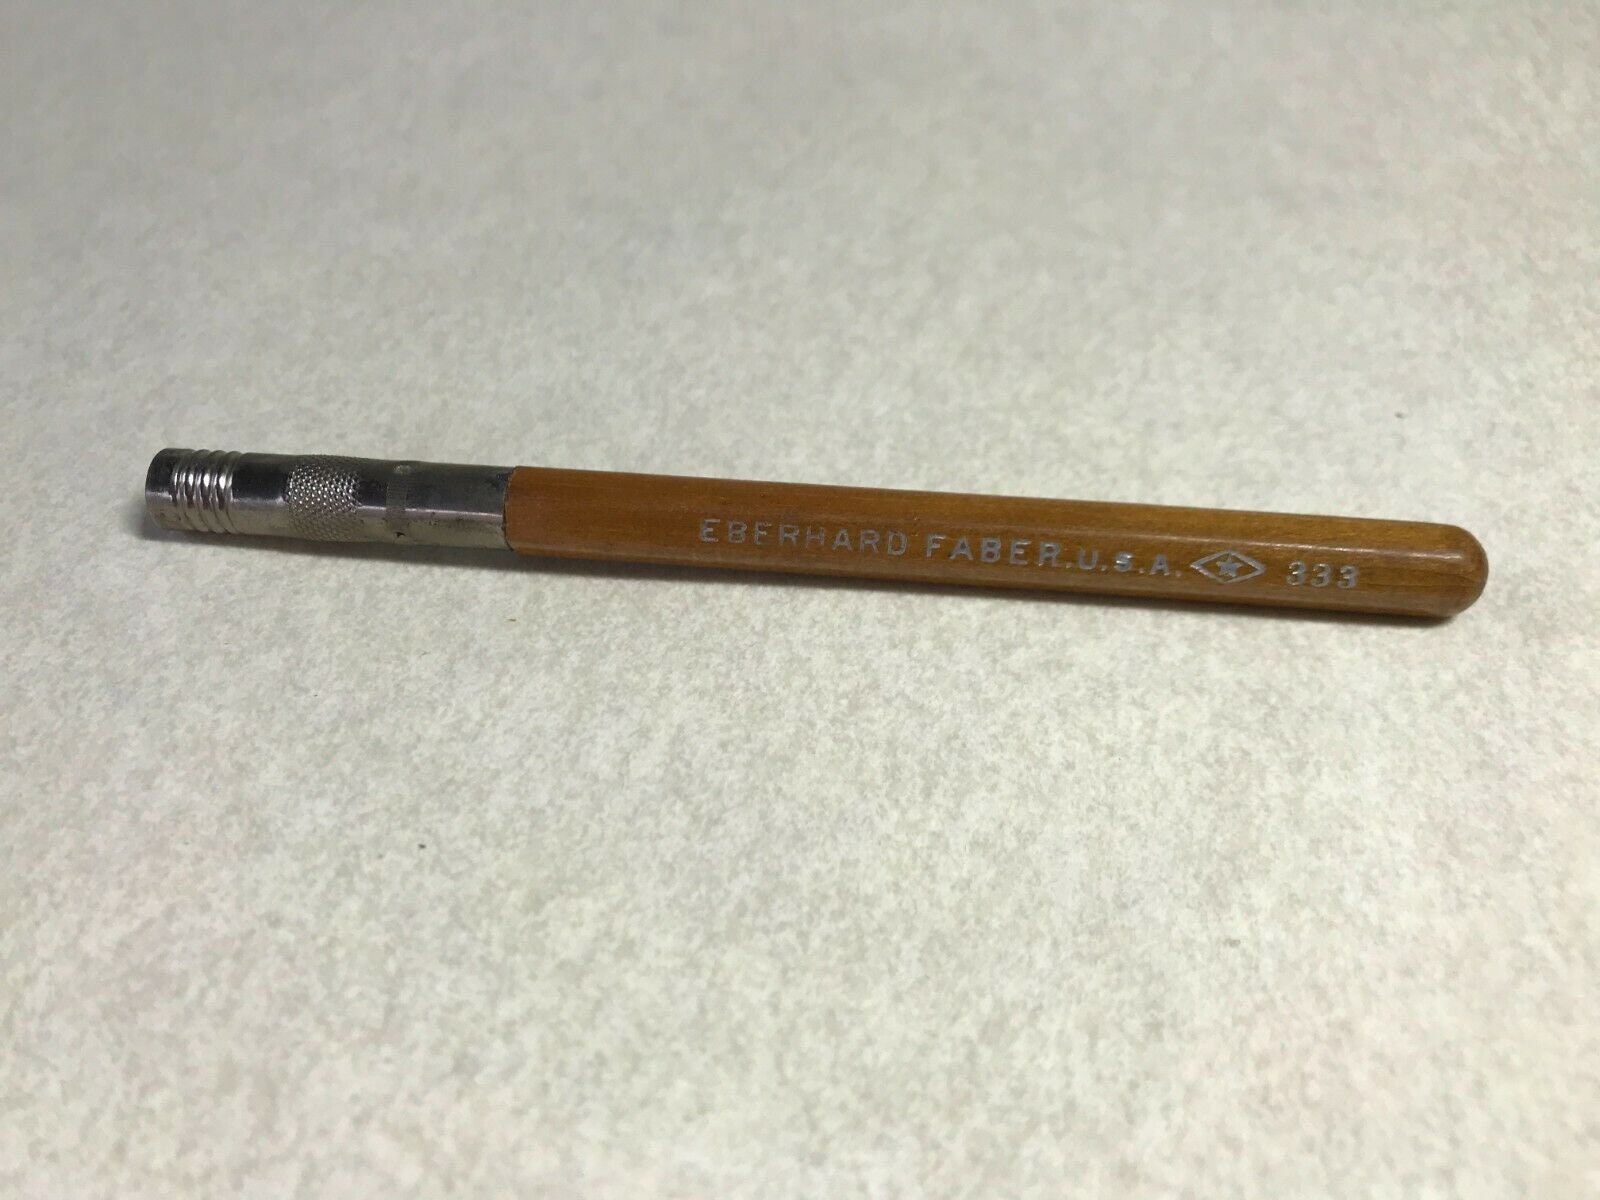 15 Pcs Portable Pencil Extenders Adjustable Pencil Extender Holder